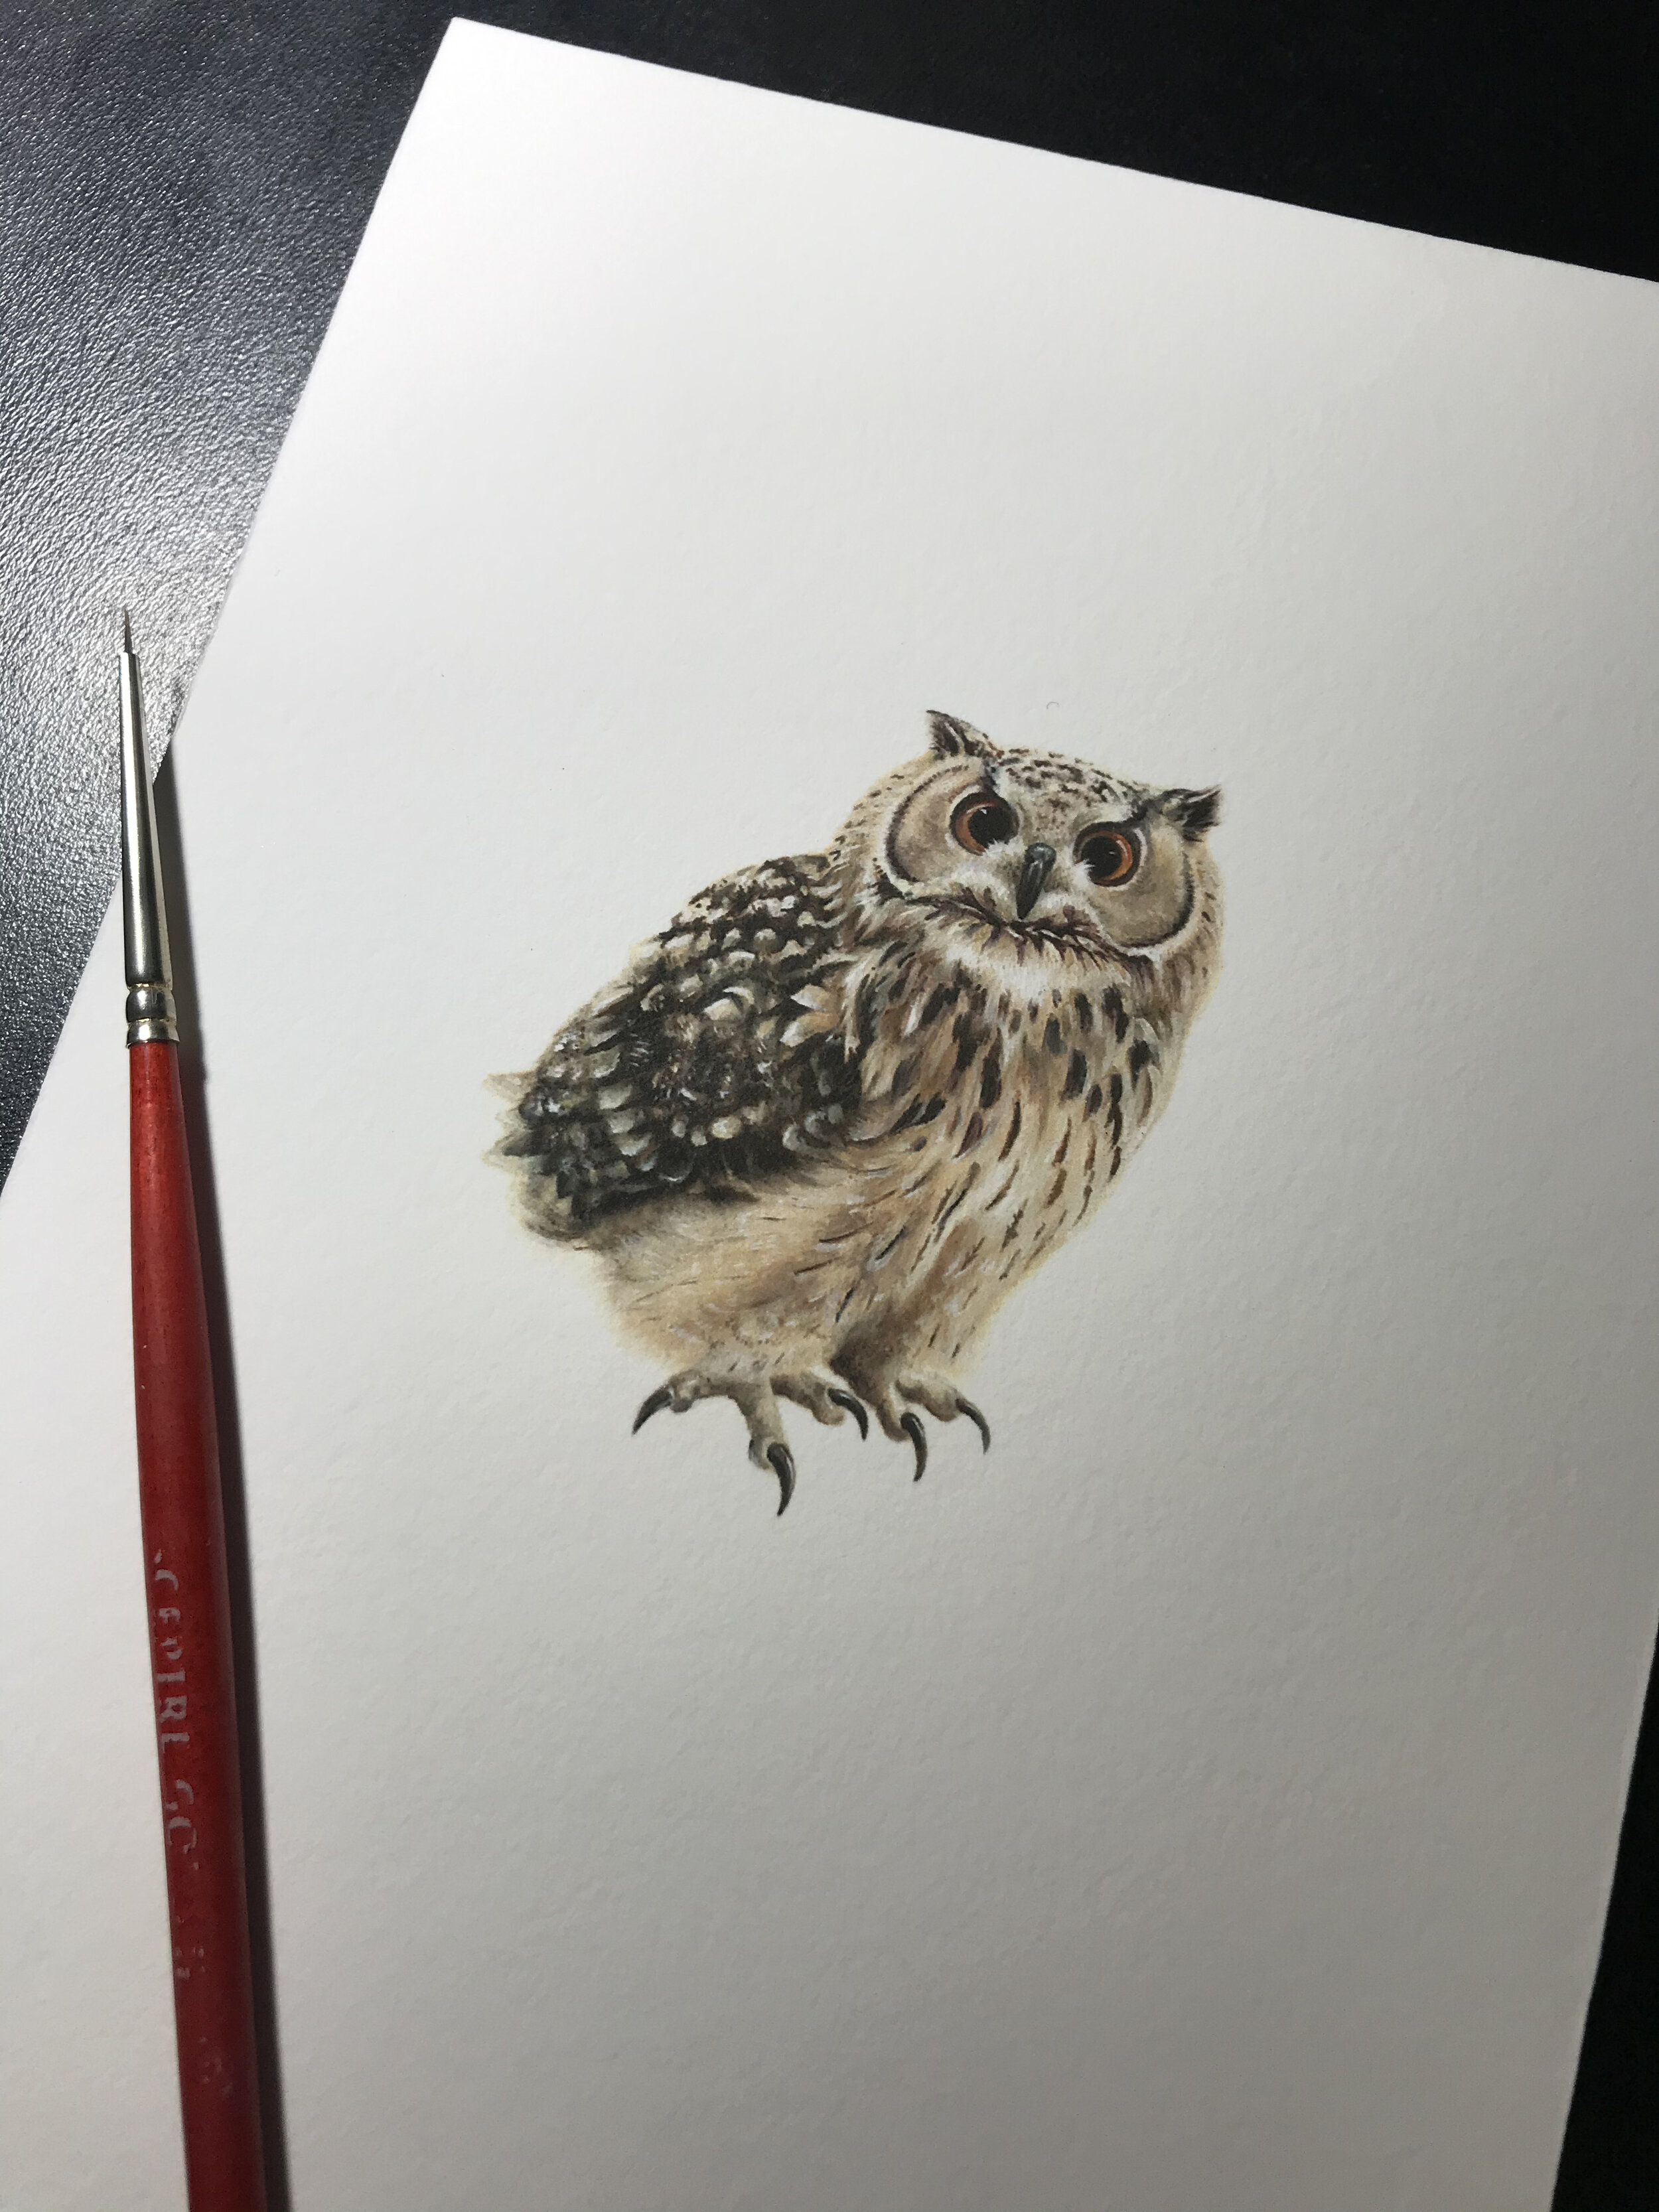 Owl - Oil on paper - 10.8 cm x 15.2 cm